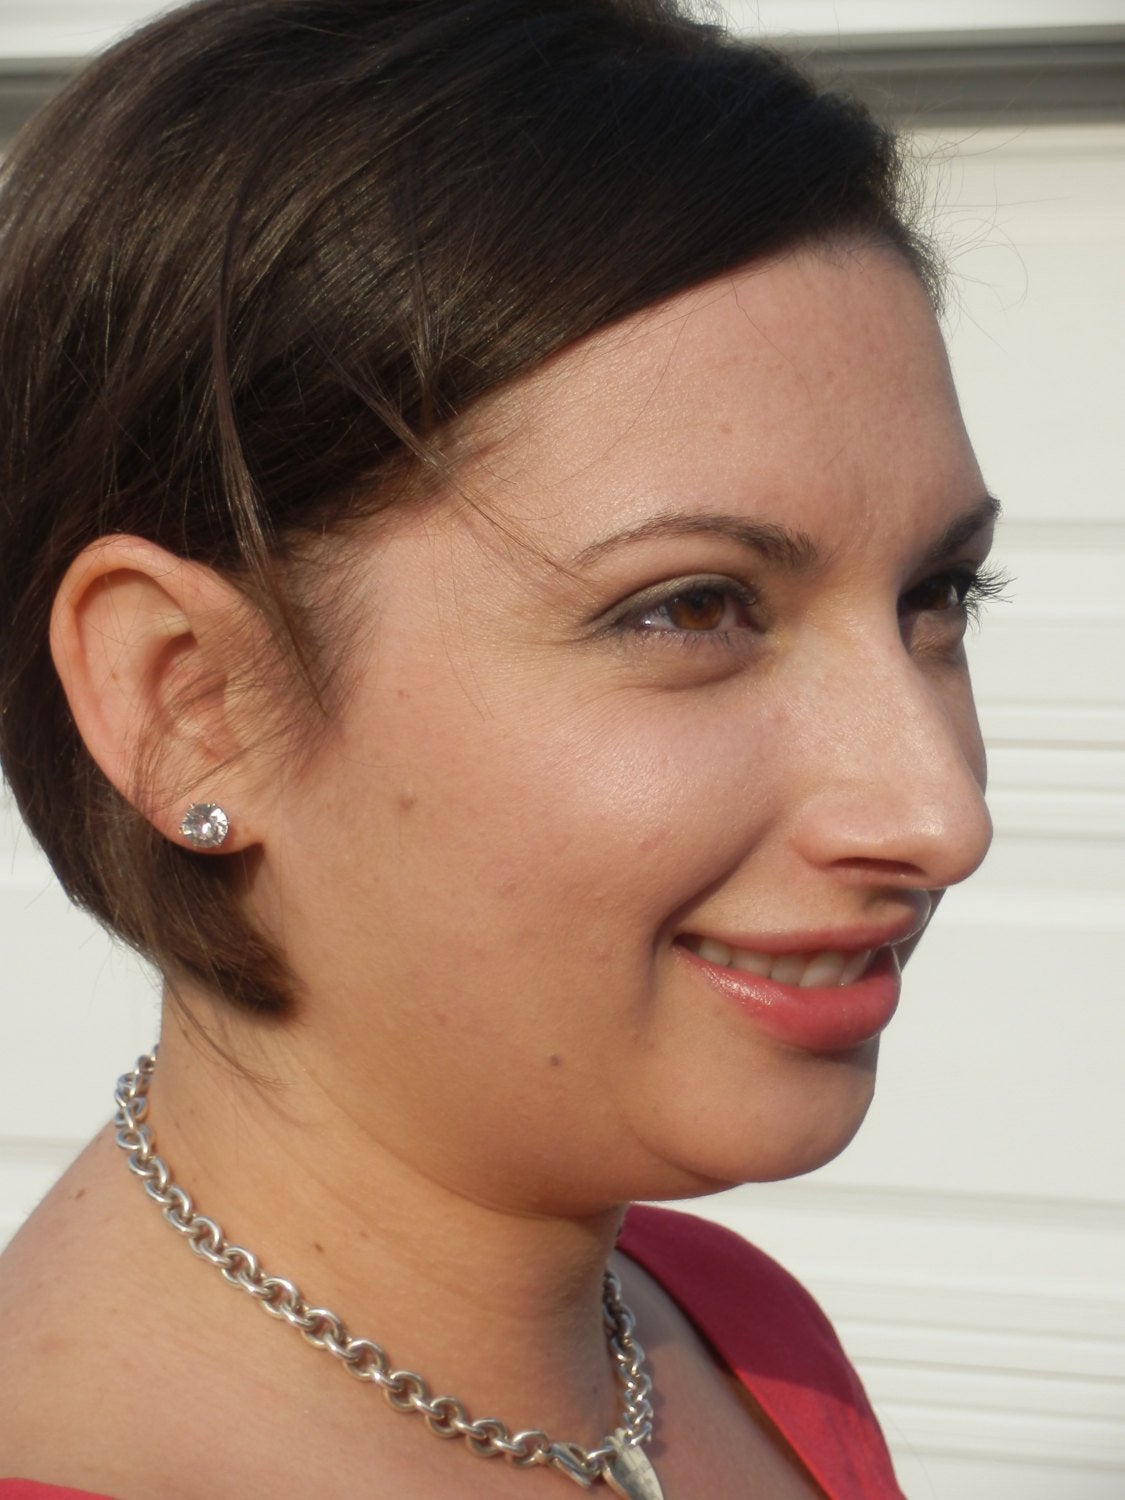 Women wearing Aquamarine Crystal Stud Earrings in silver setting in red top.